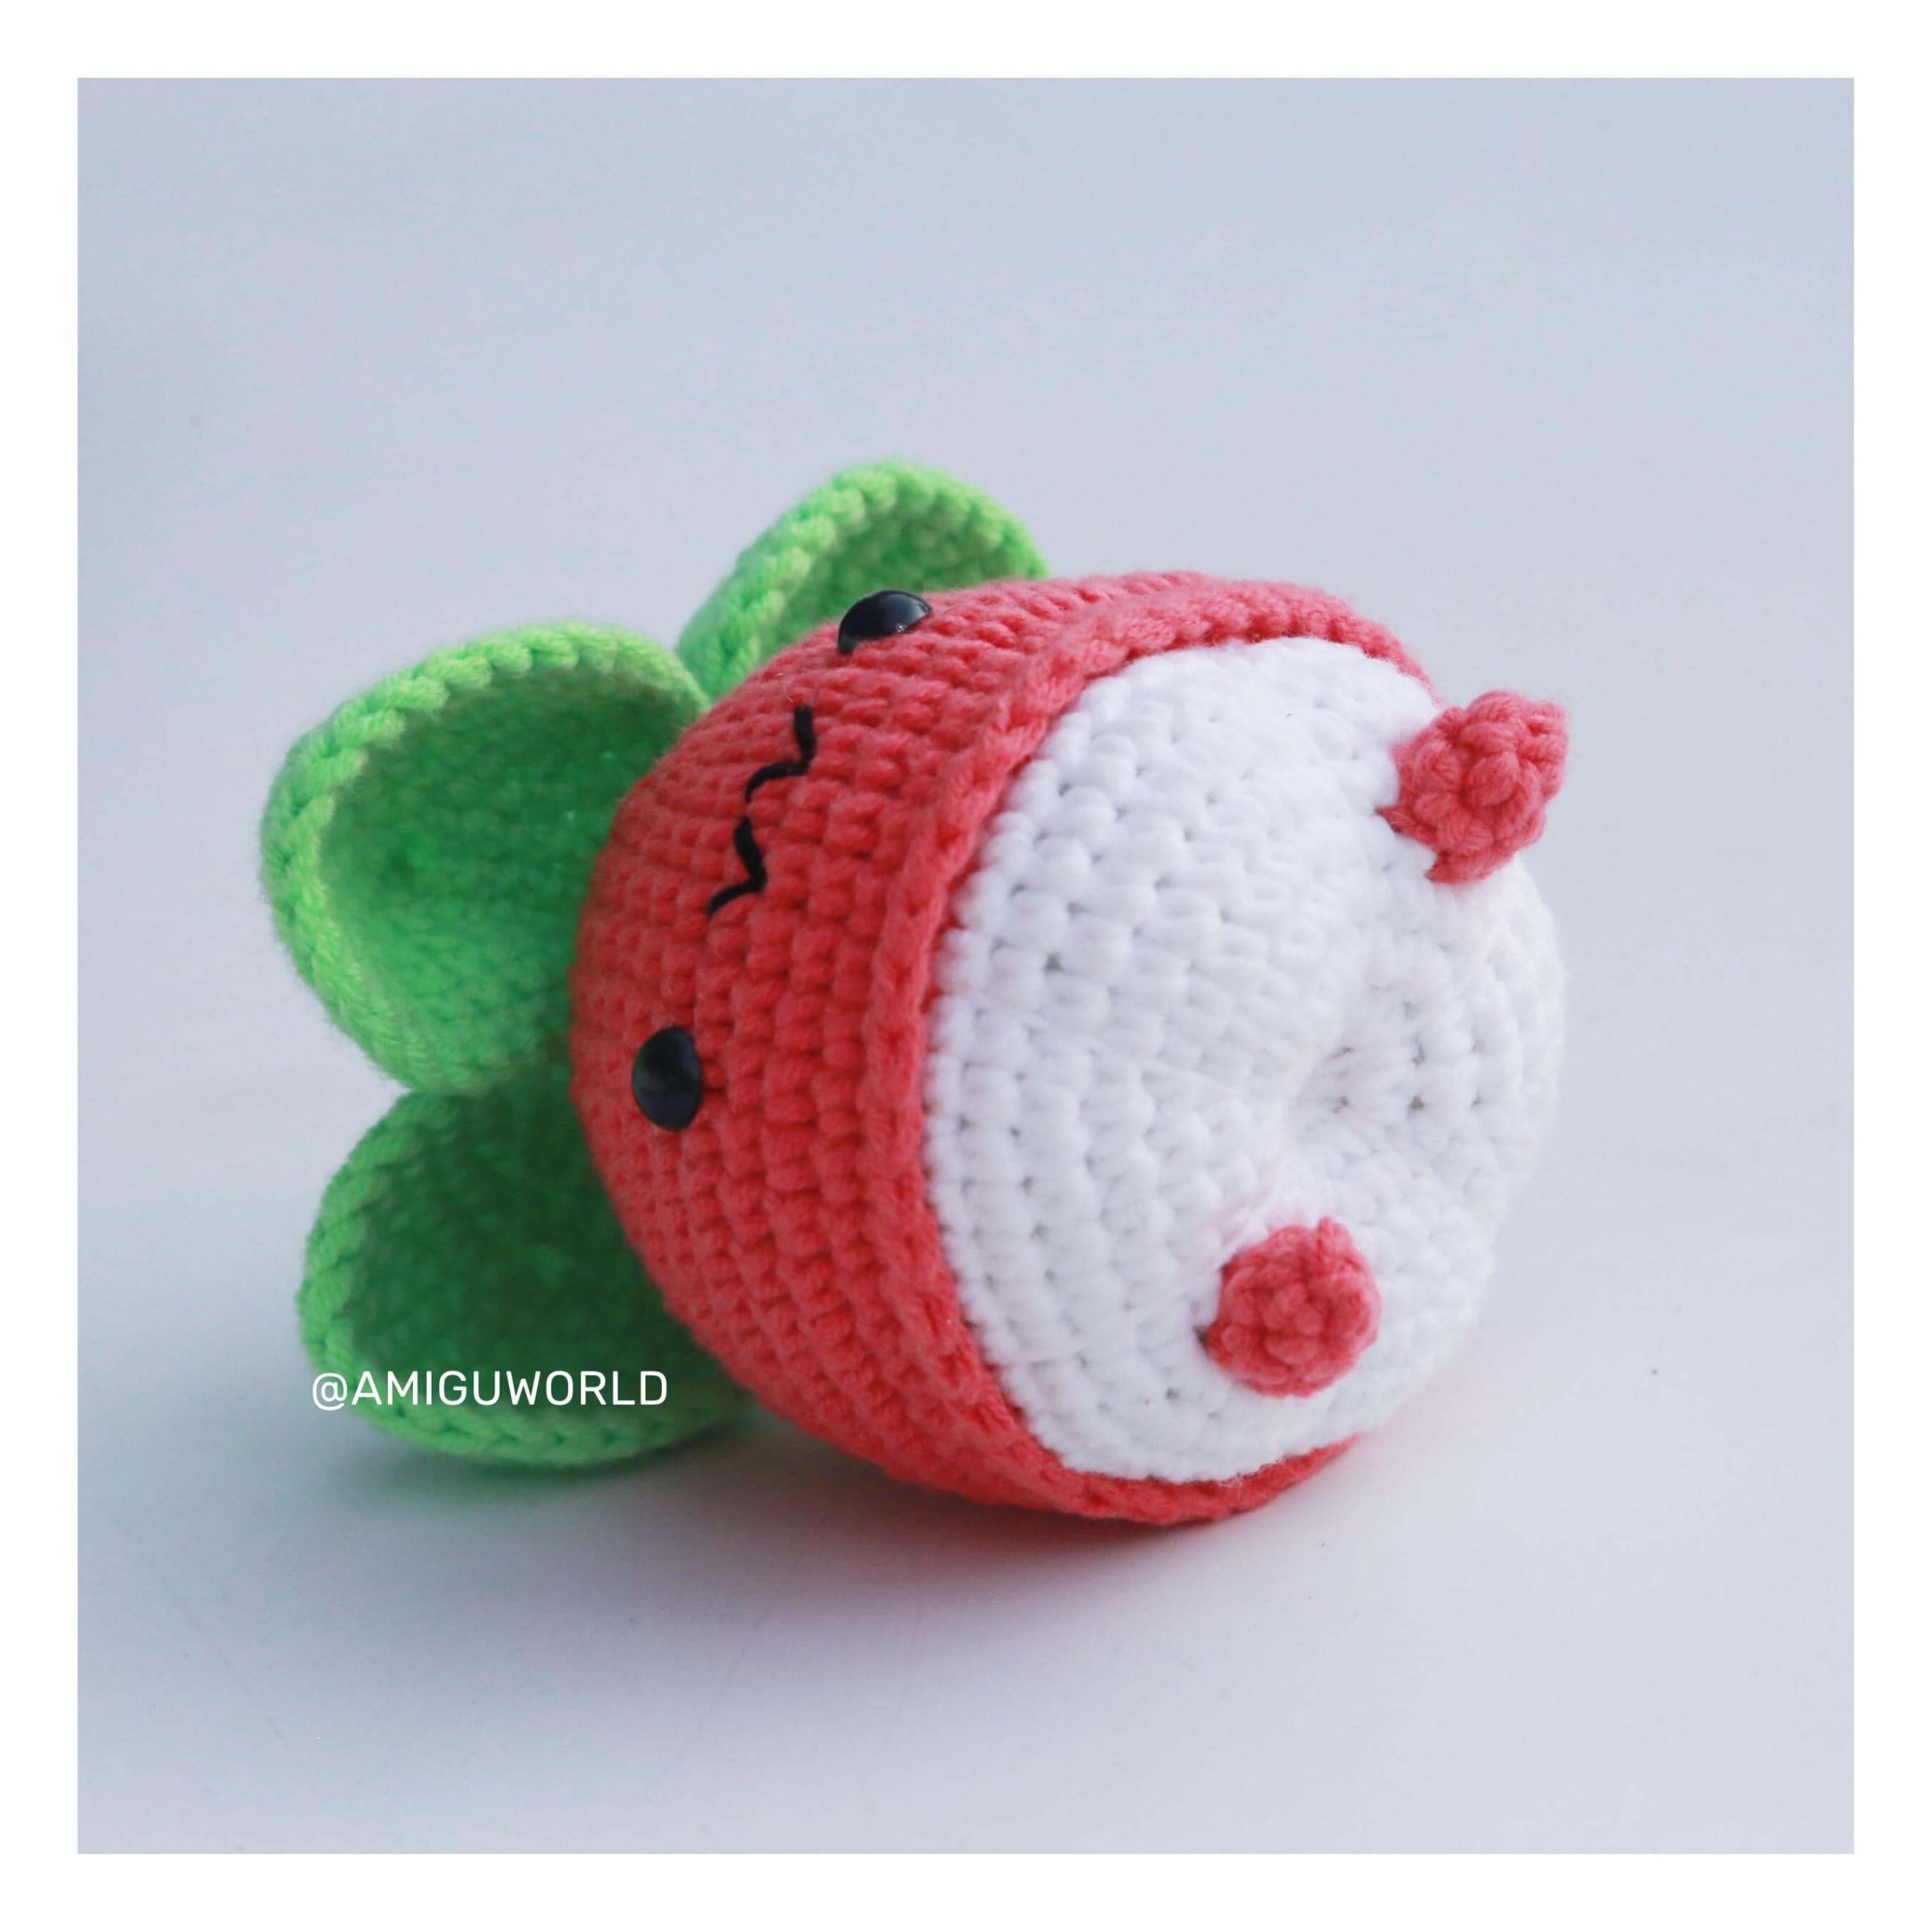 Amakaji-amigurumi-crochet-pattern-by-AmiguWorld (2)